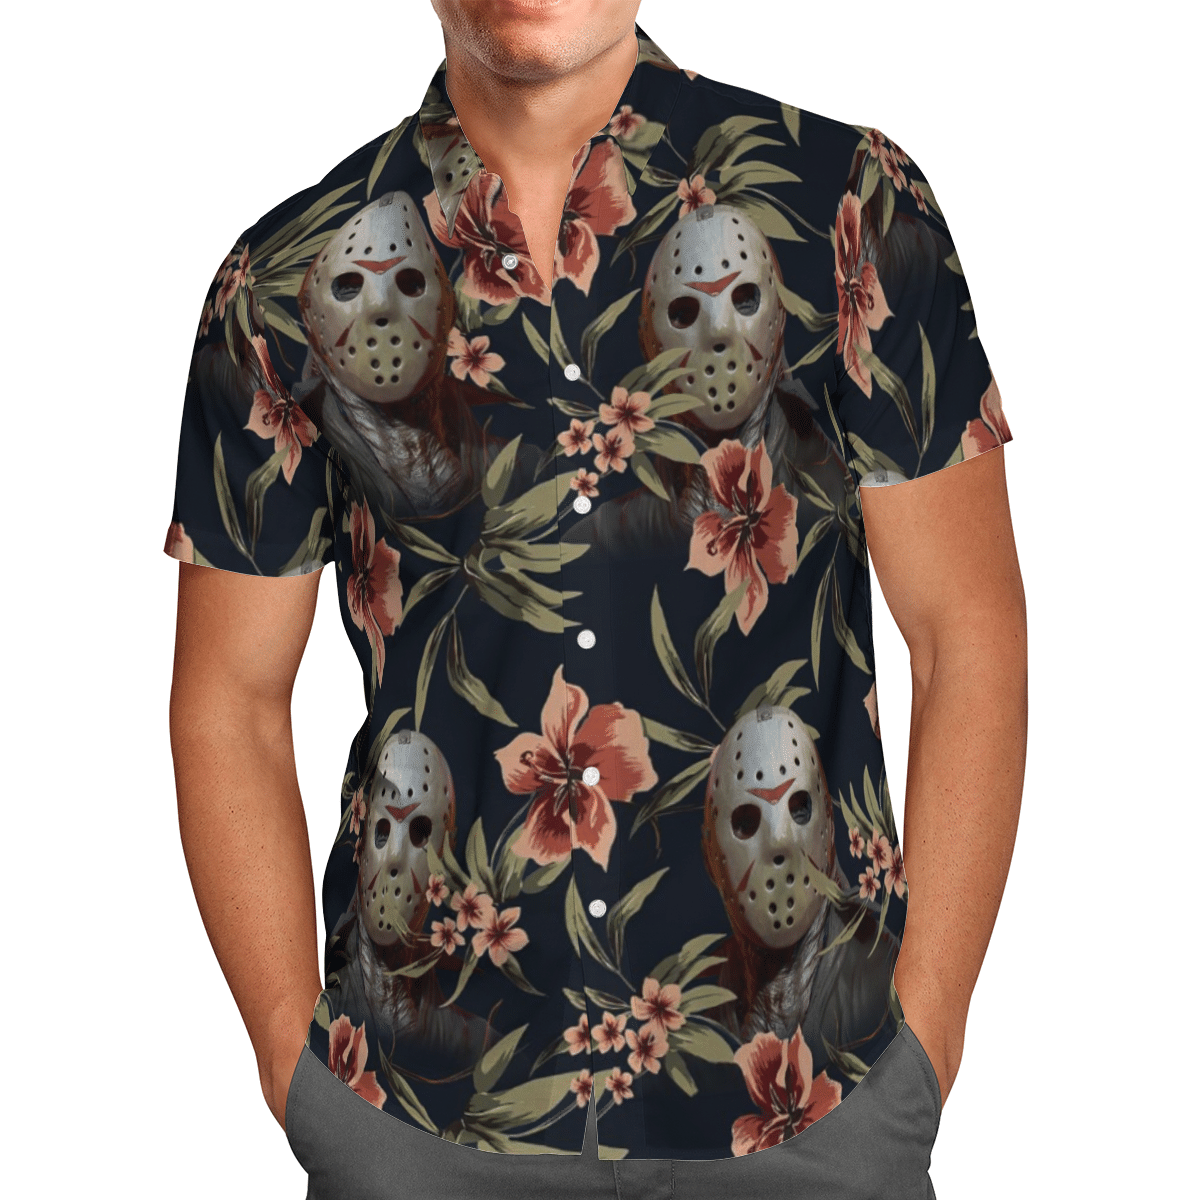 Jason Voorhees Hawaiian shirt and short – LIMITED EDITION